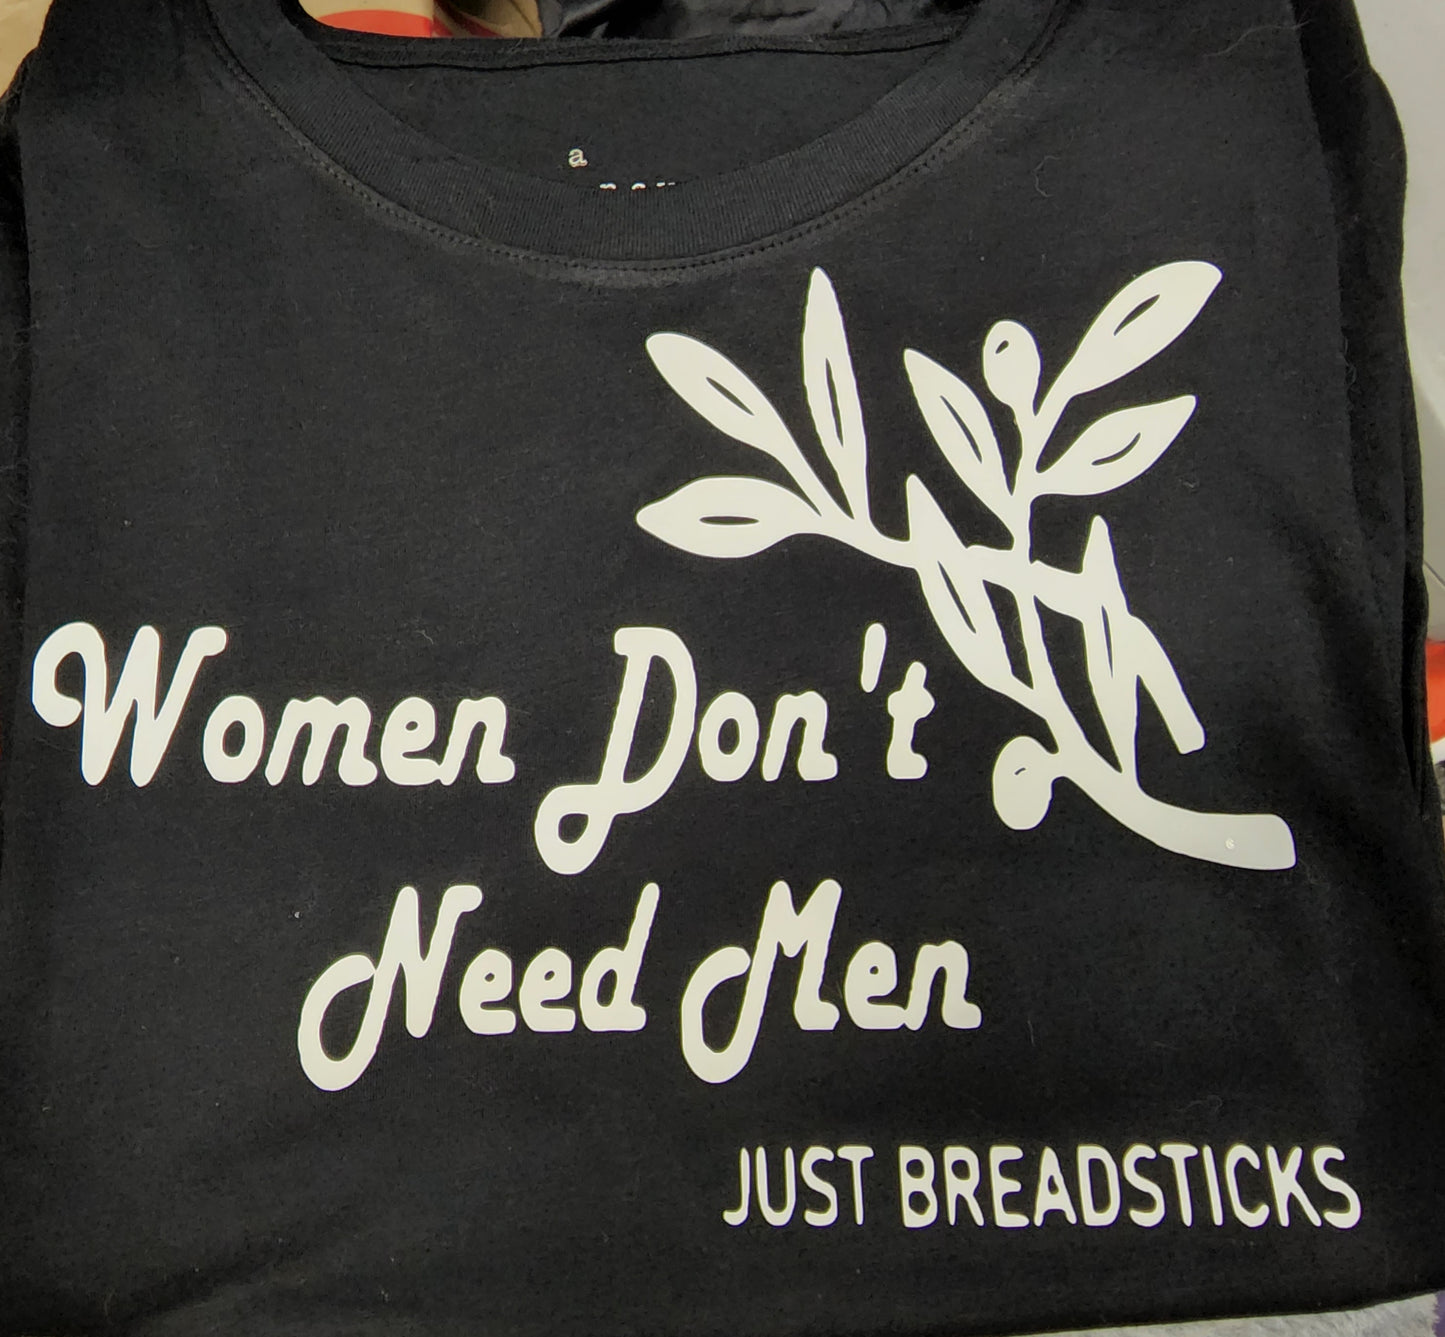 Just Breadsticks